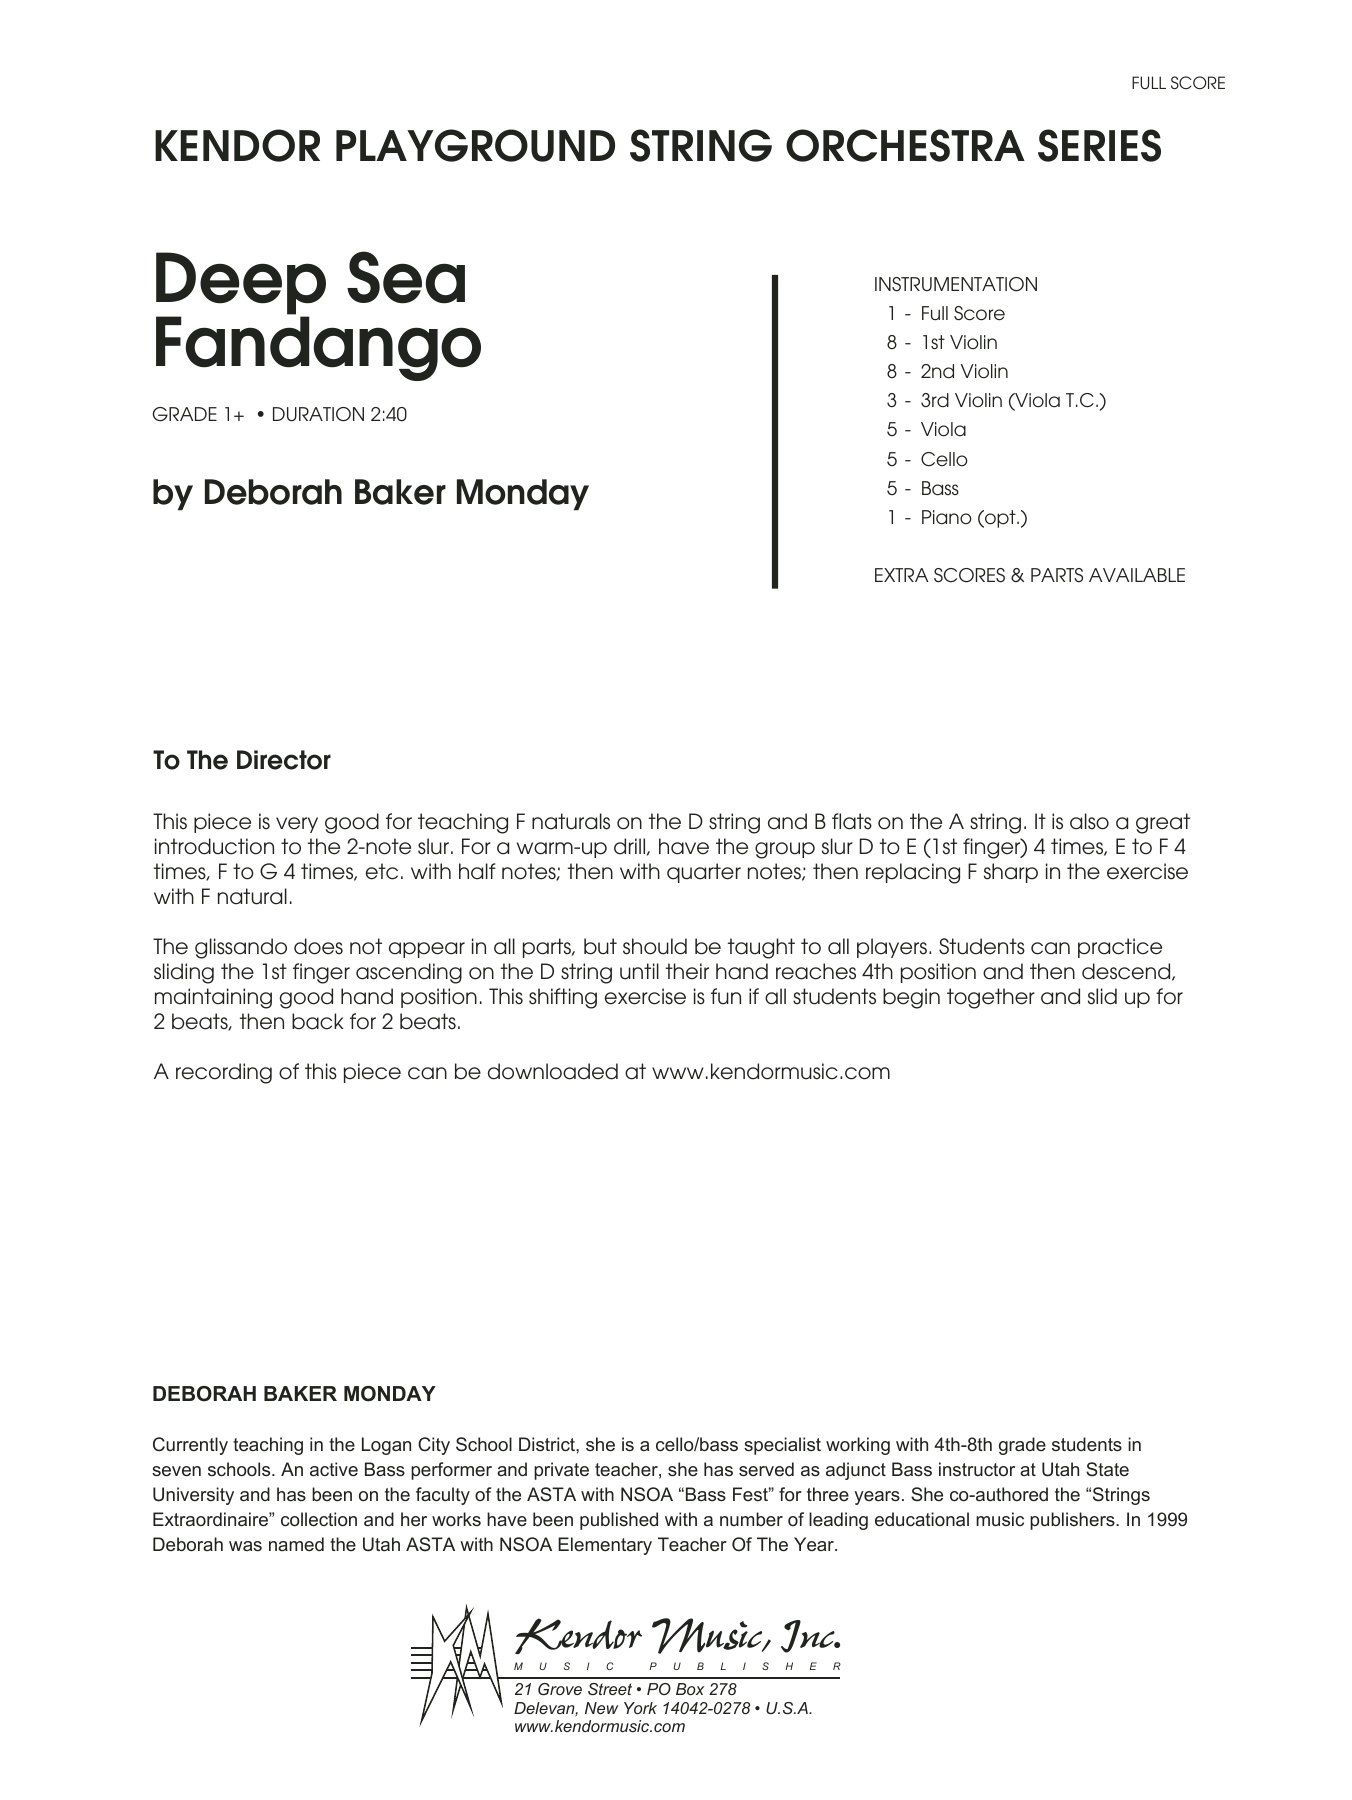 Download Deborah Baker Monday Deep Sea Fandango - Full Score Sheet Music